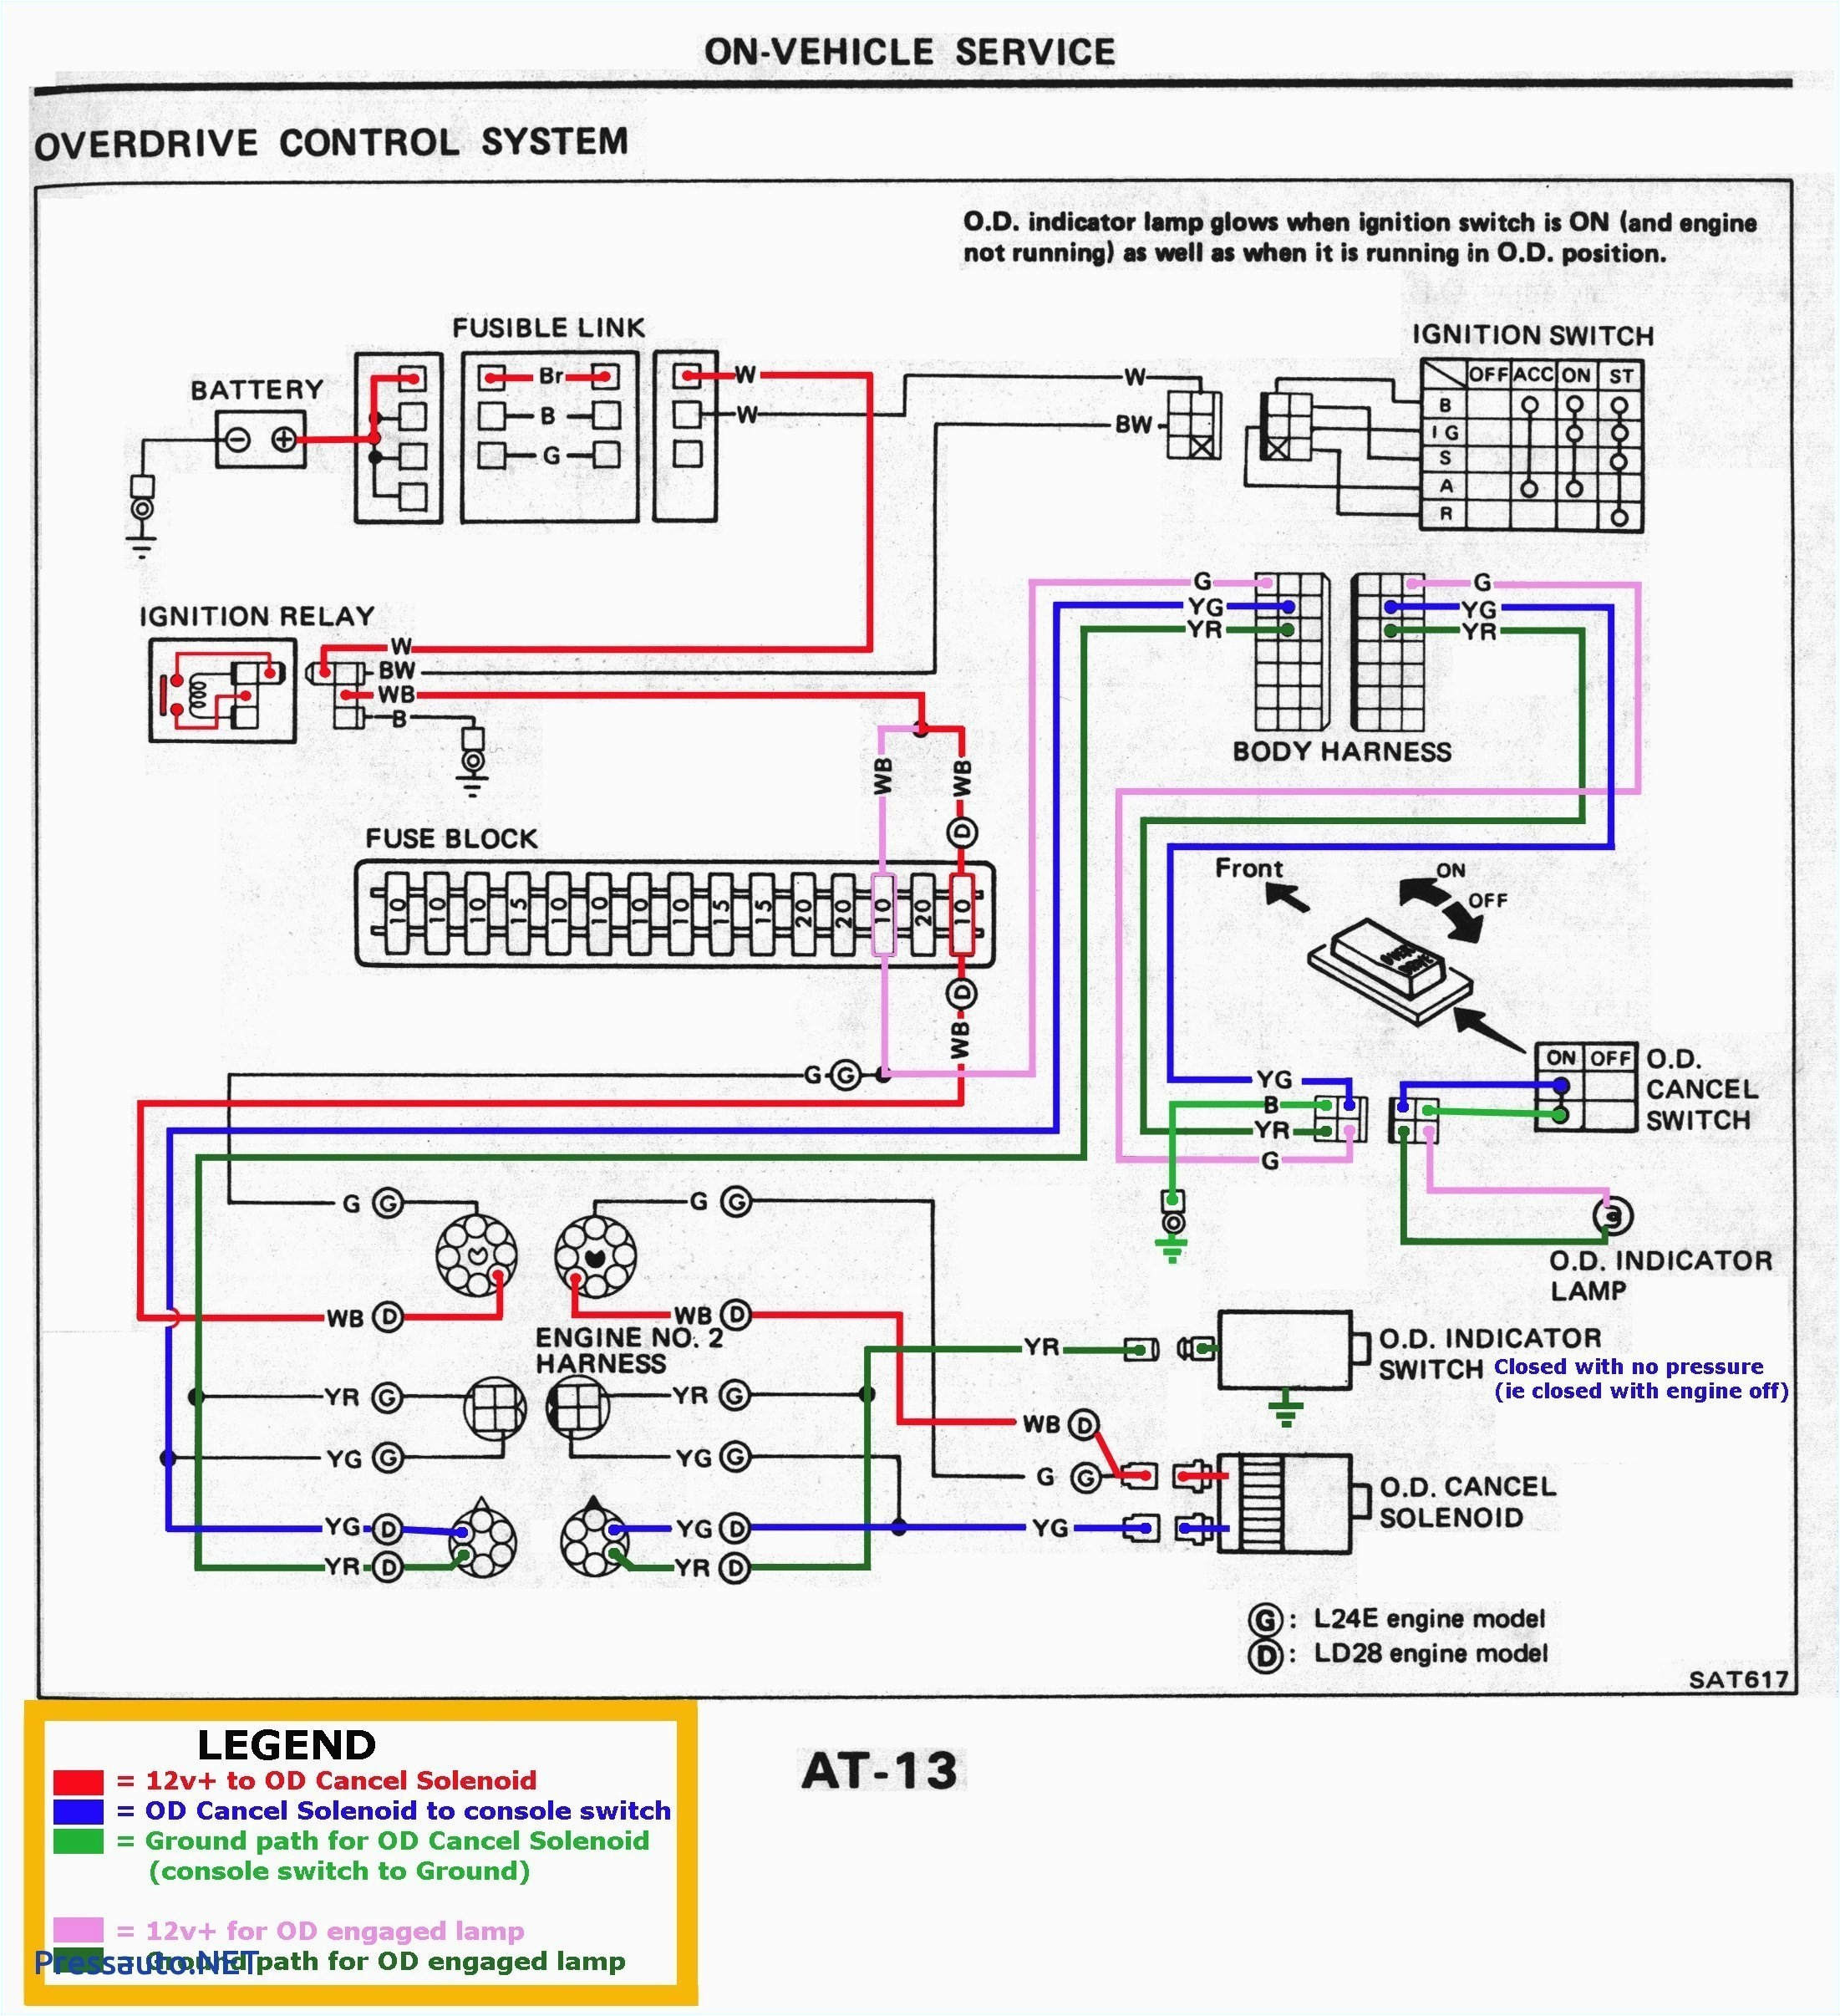 arco wiring diagram wiring diagram schematic arco wiring diagrams